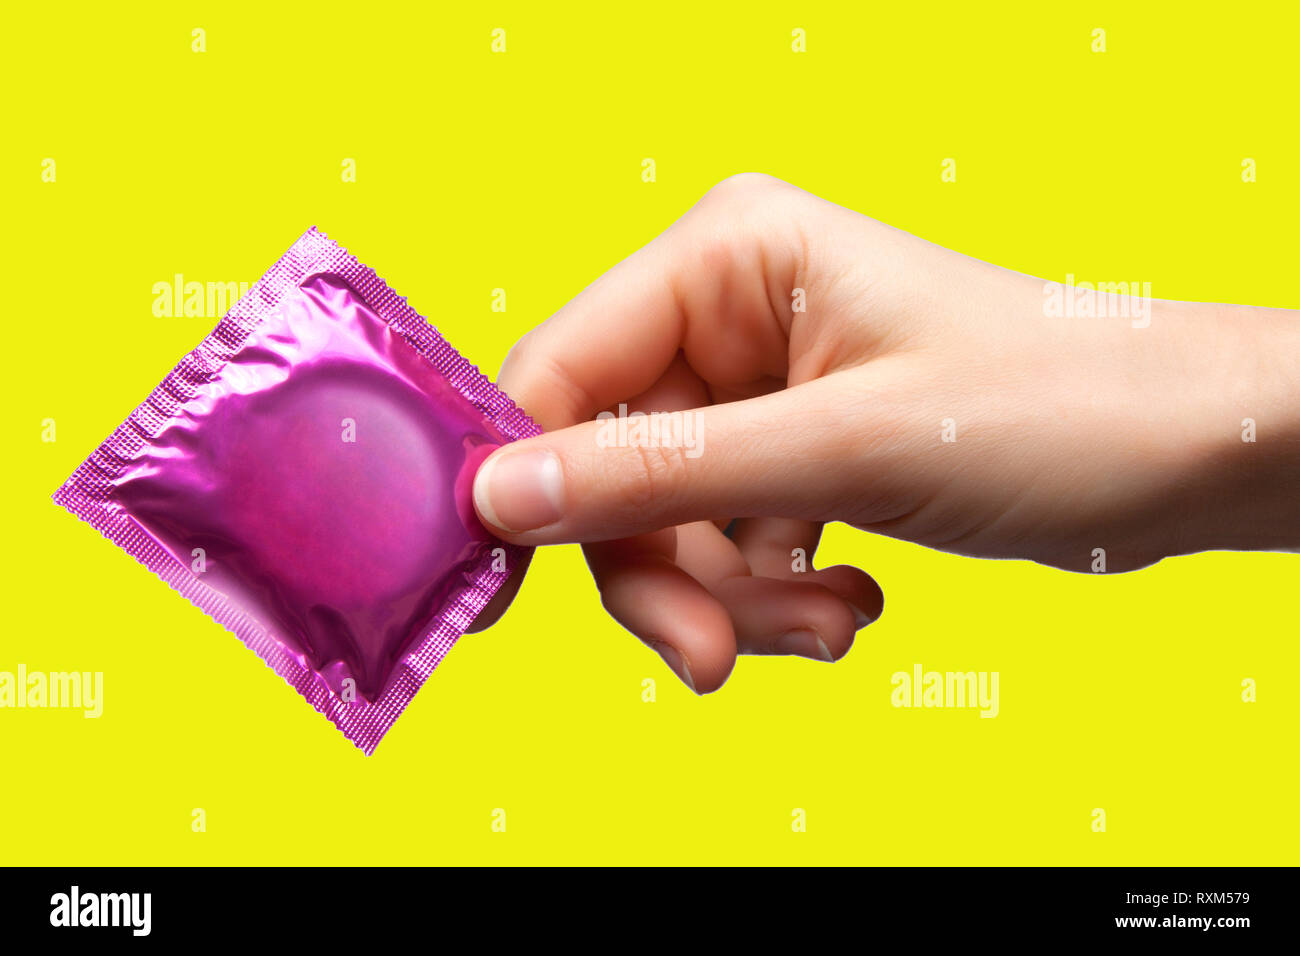 preservativo in mano Foto stock - Alamy